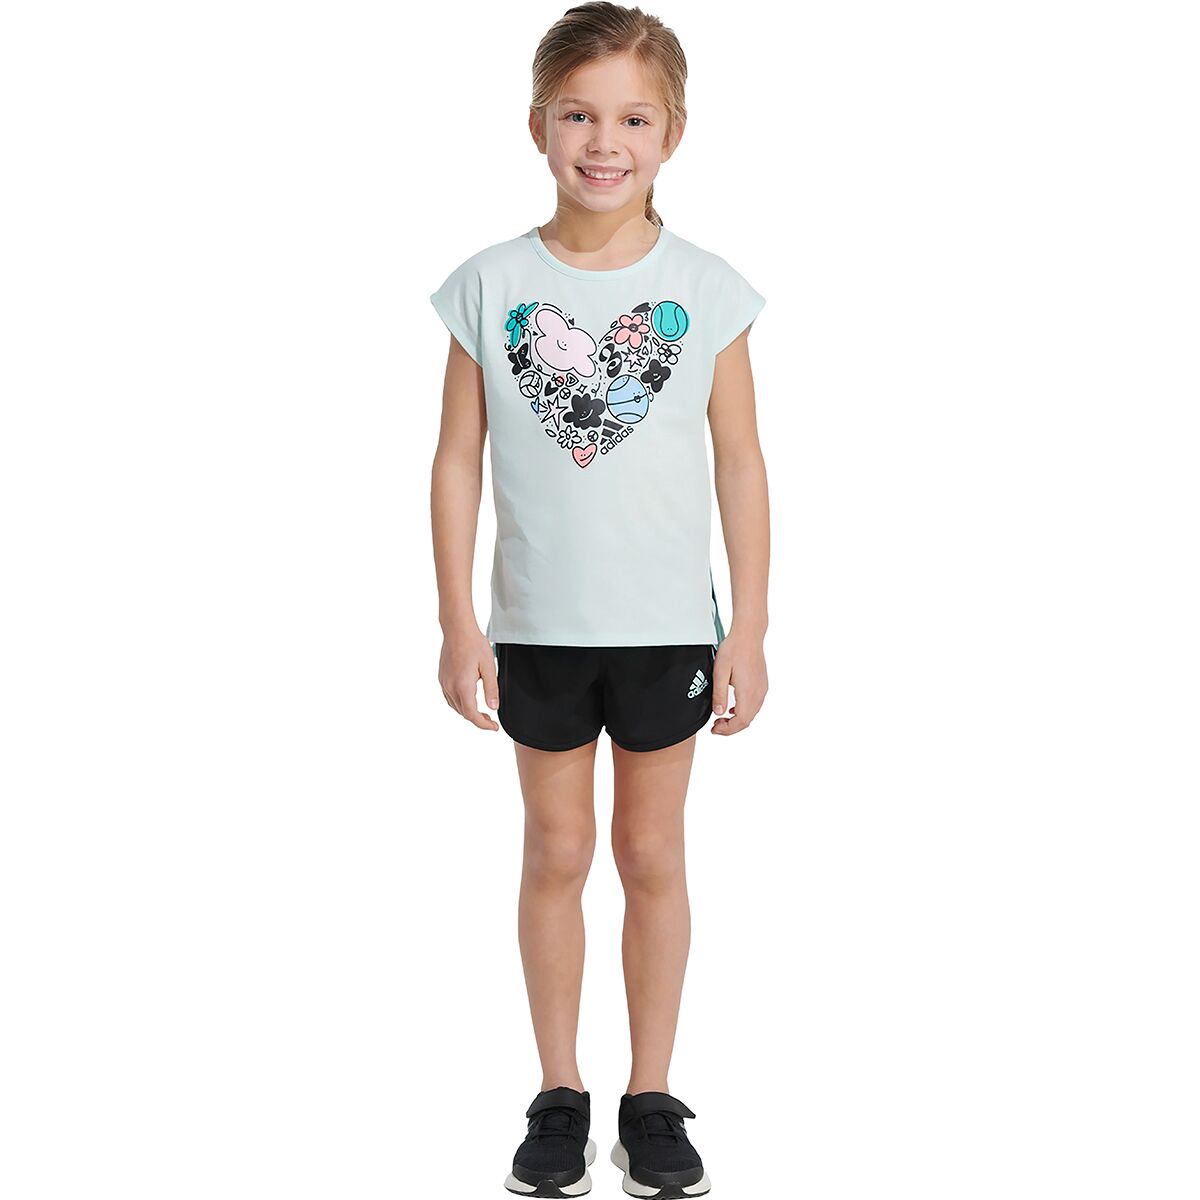 Adidas Graphic T-Shirt Mesh Short Set - Girls'